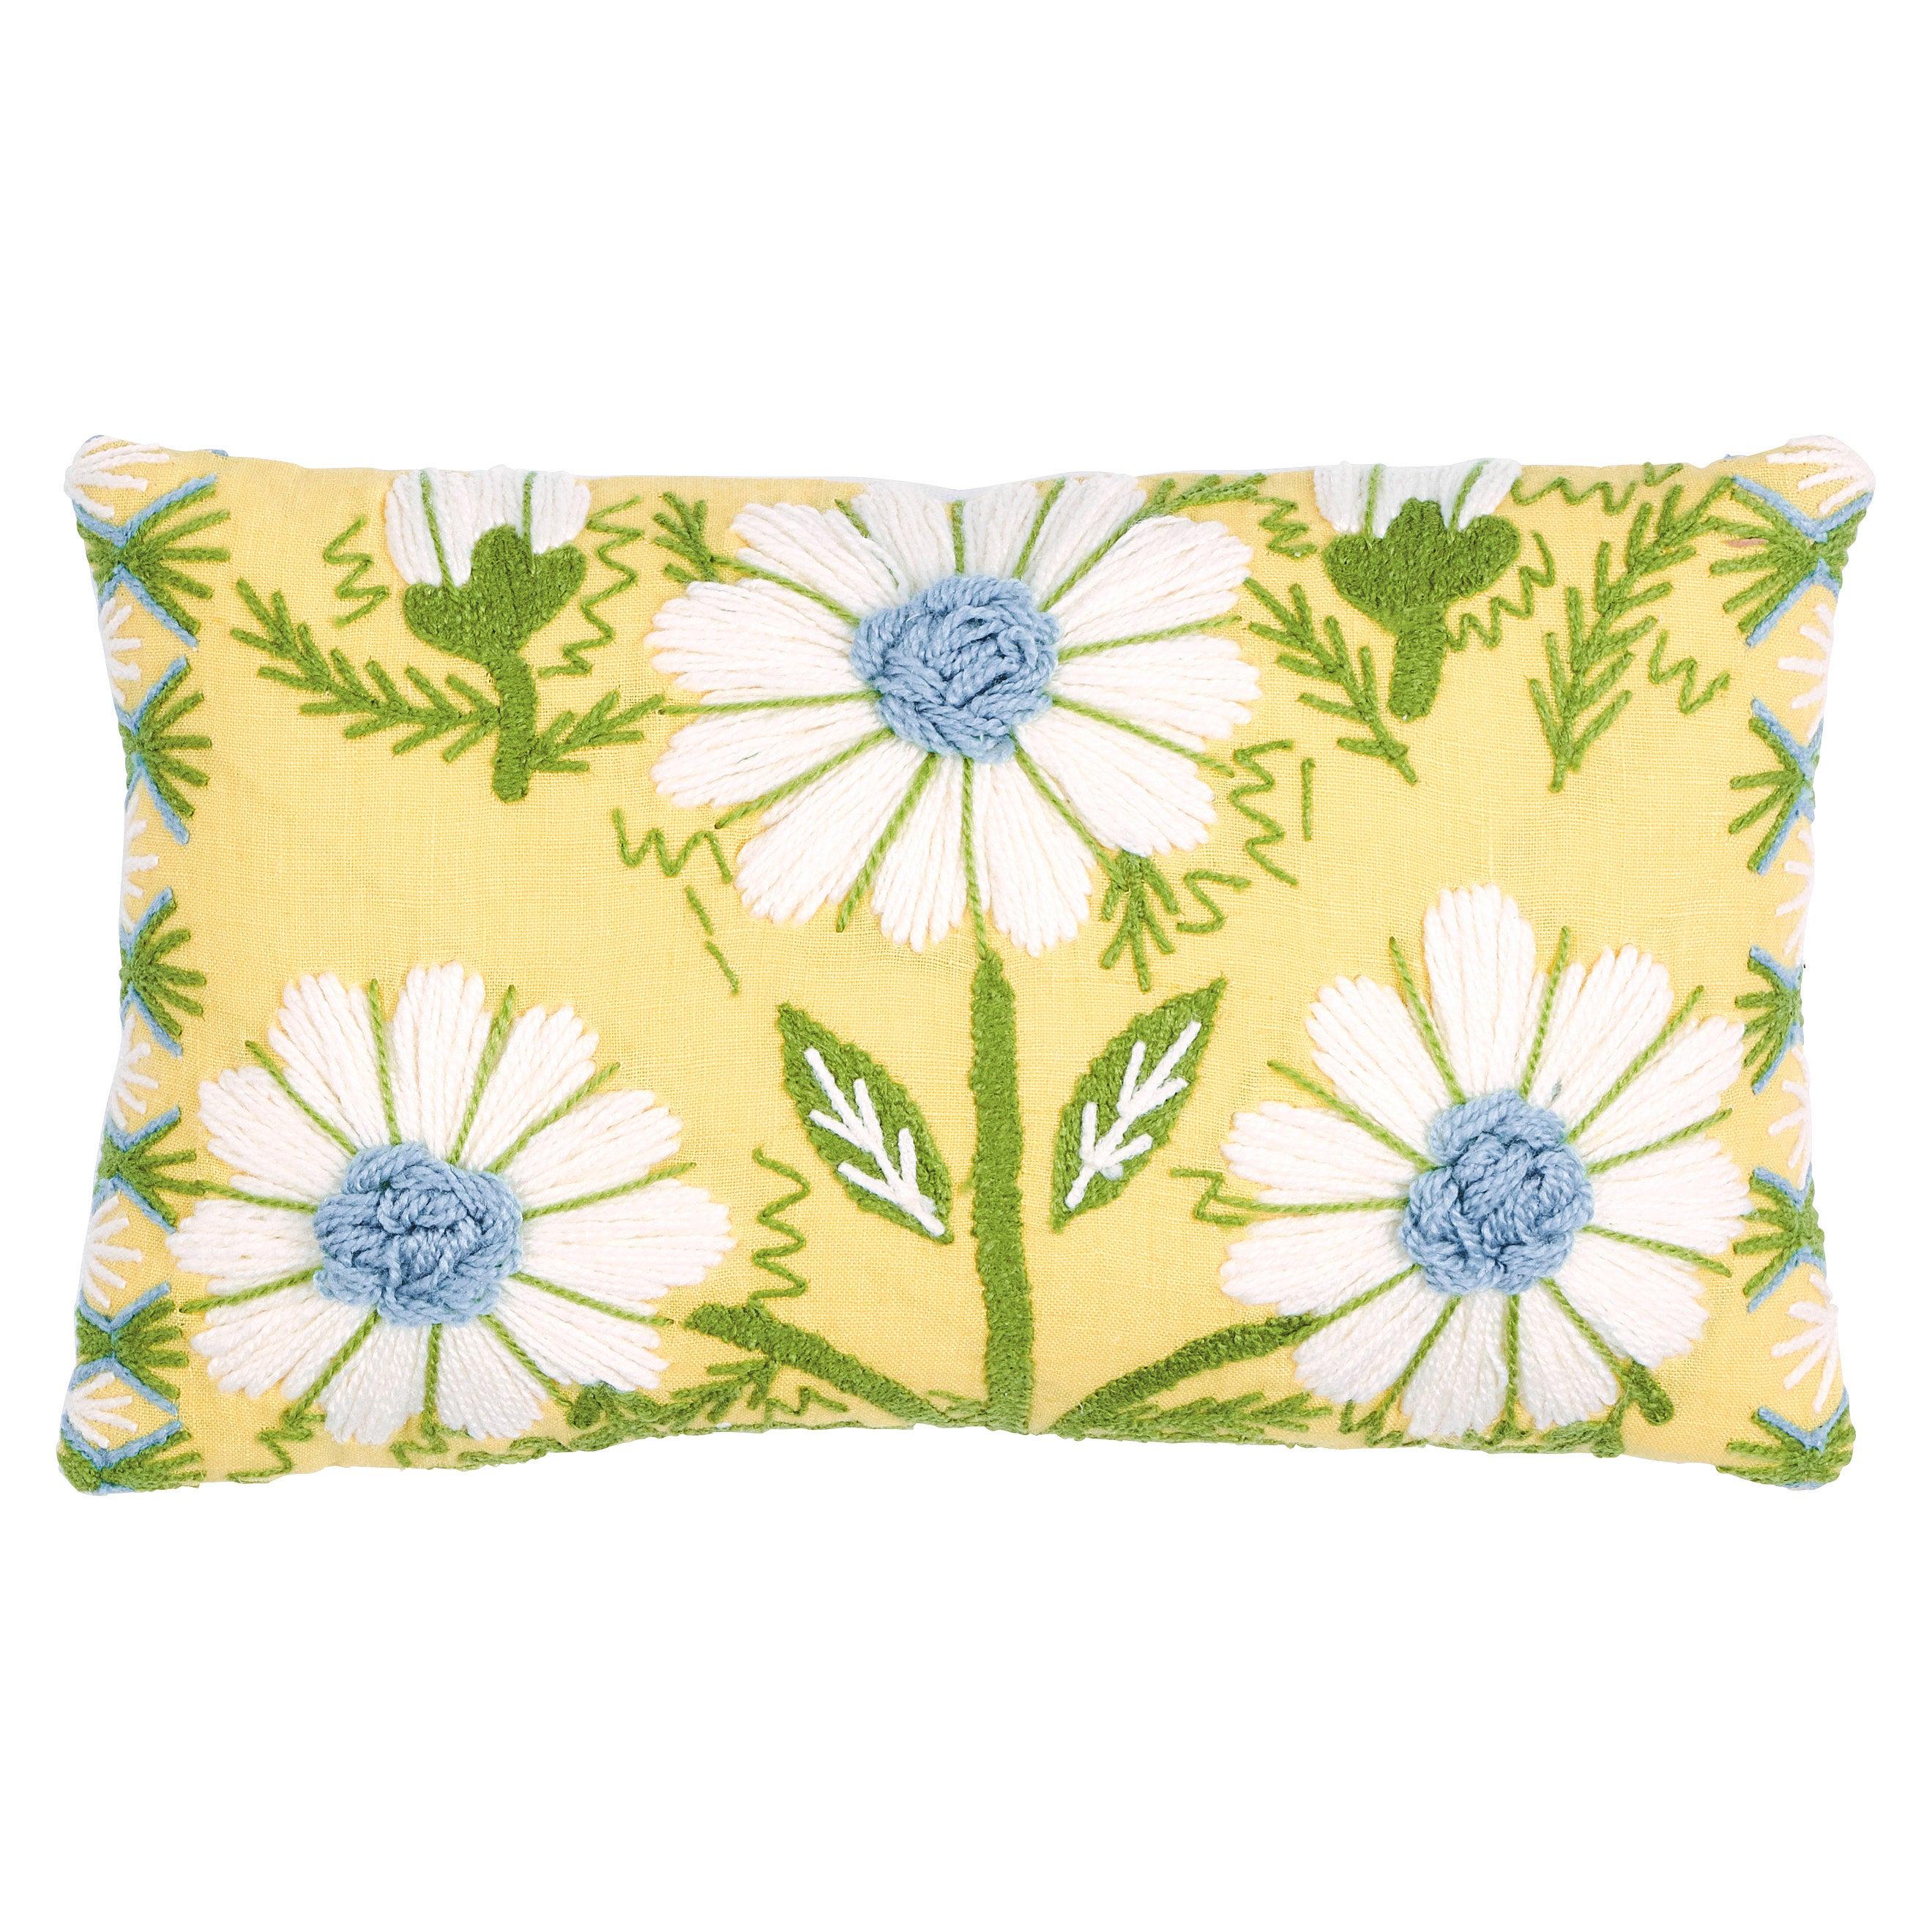 Schumacher Marguerite Embroidery Pillow in Buttercup